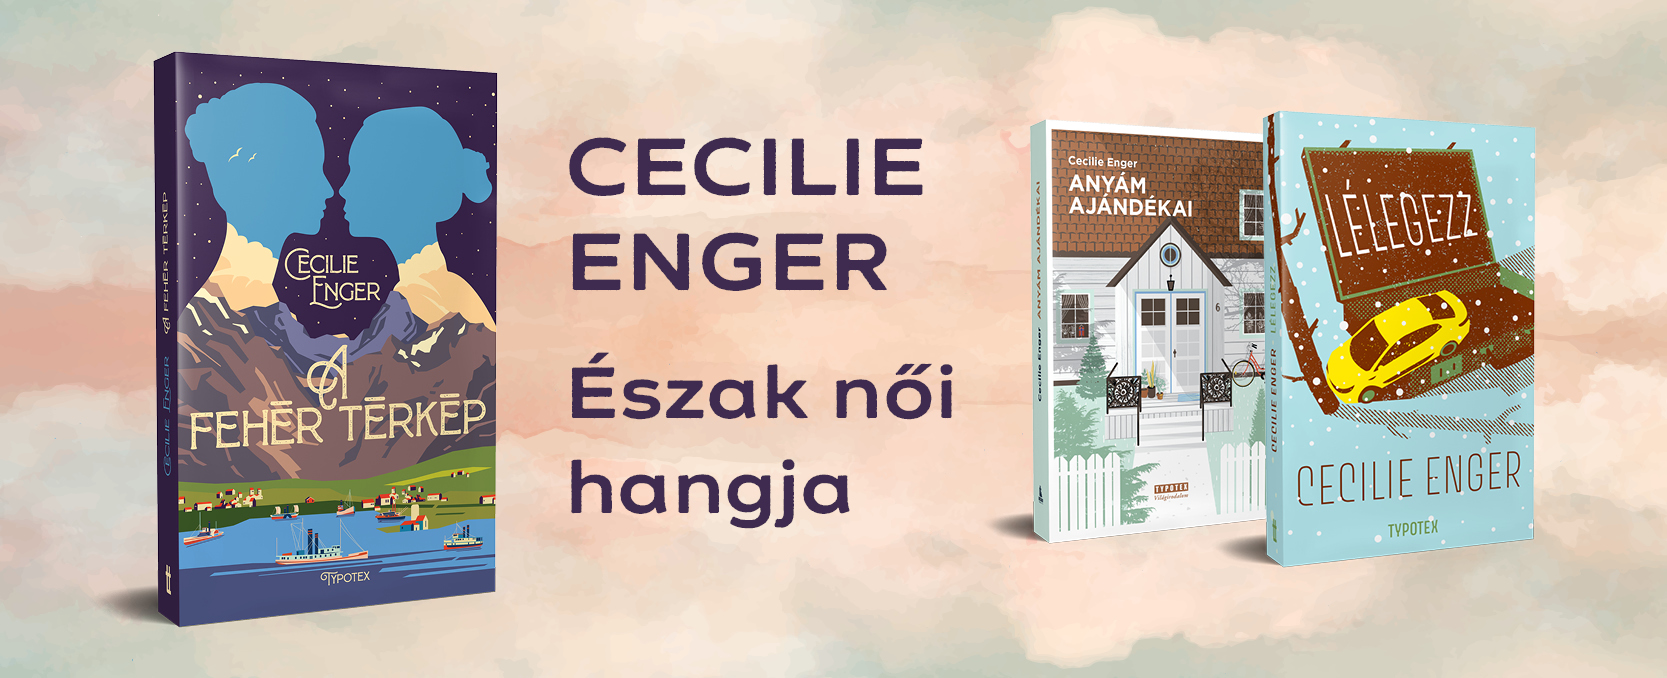 Cecilie Enger regényei